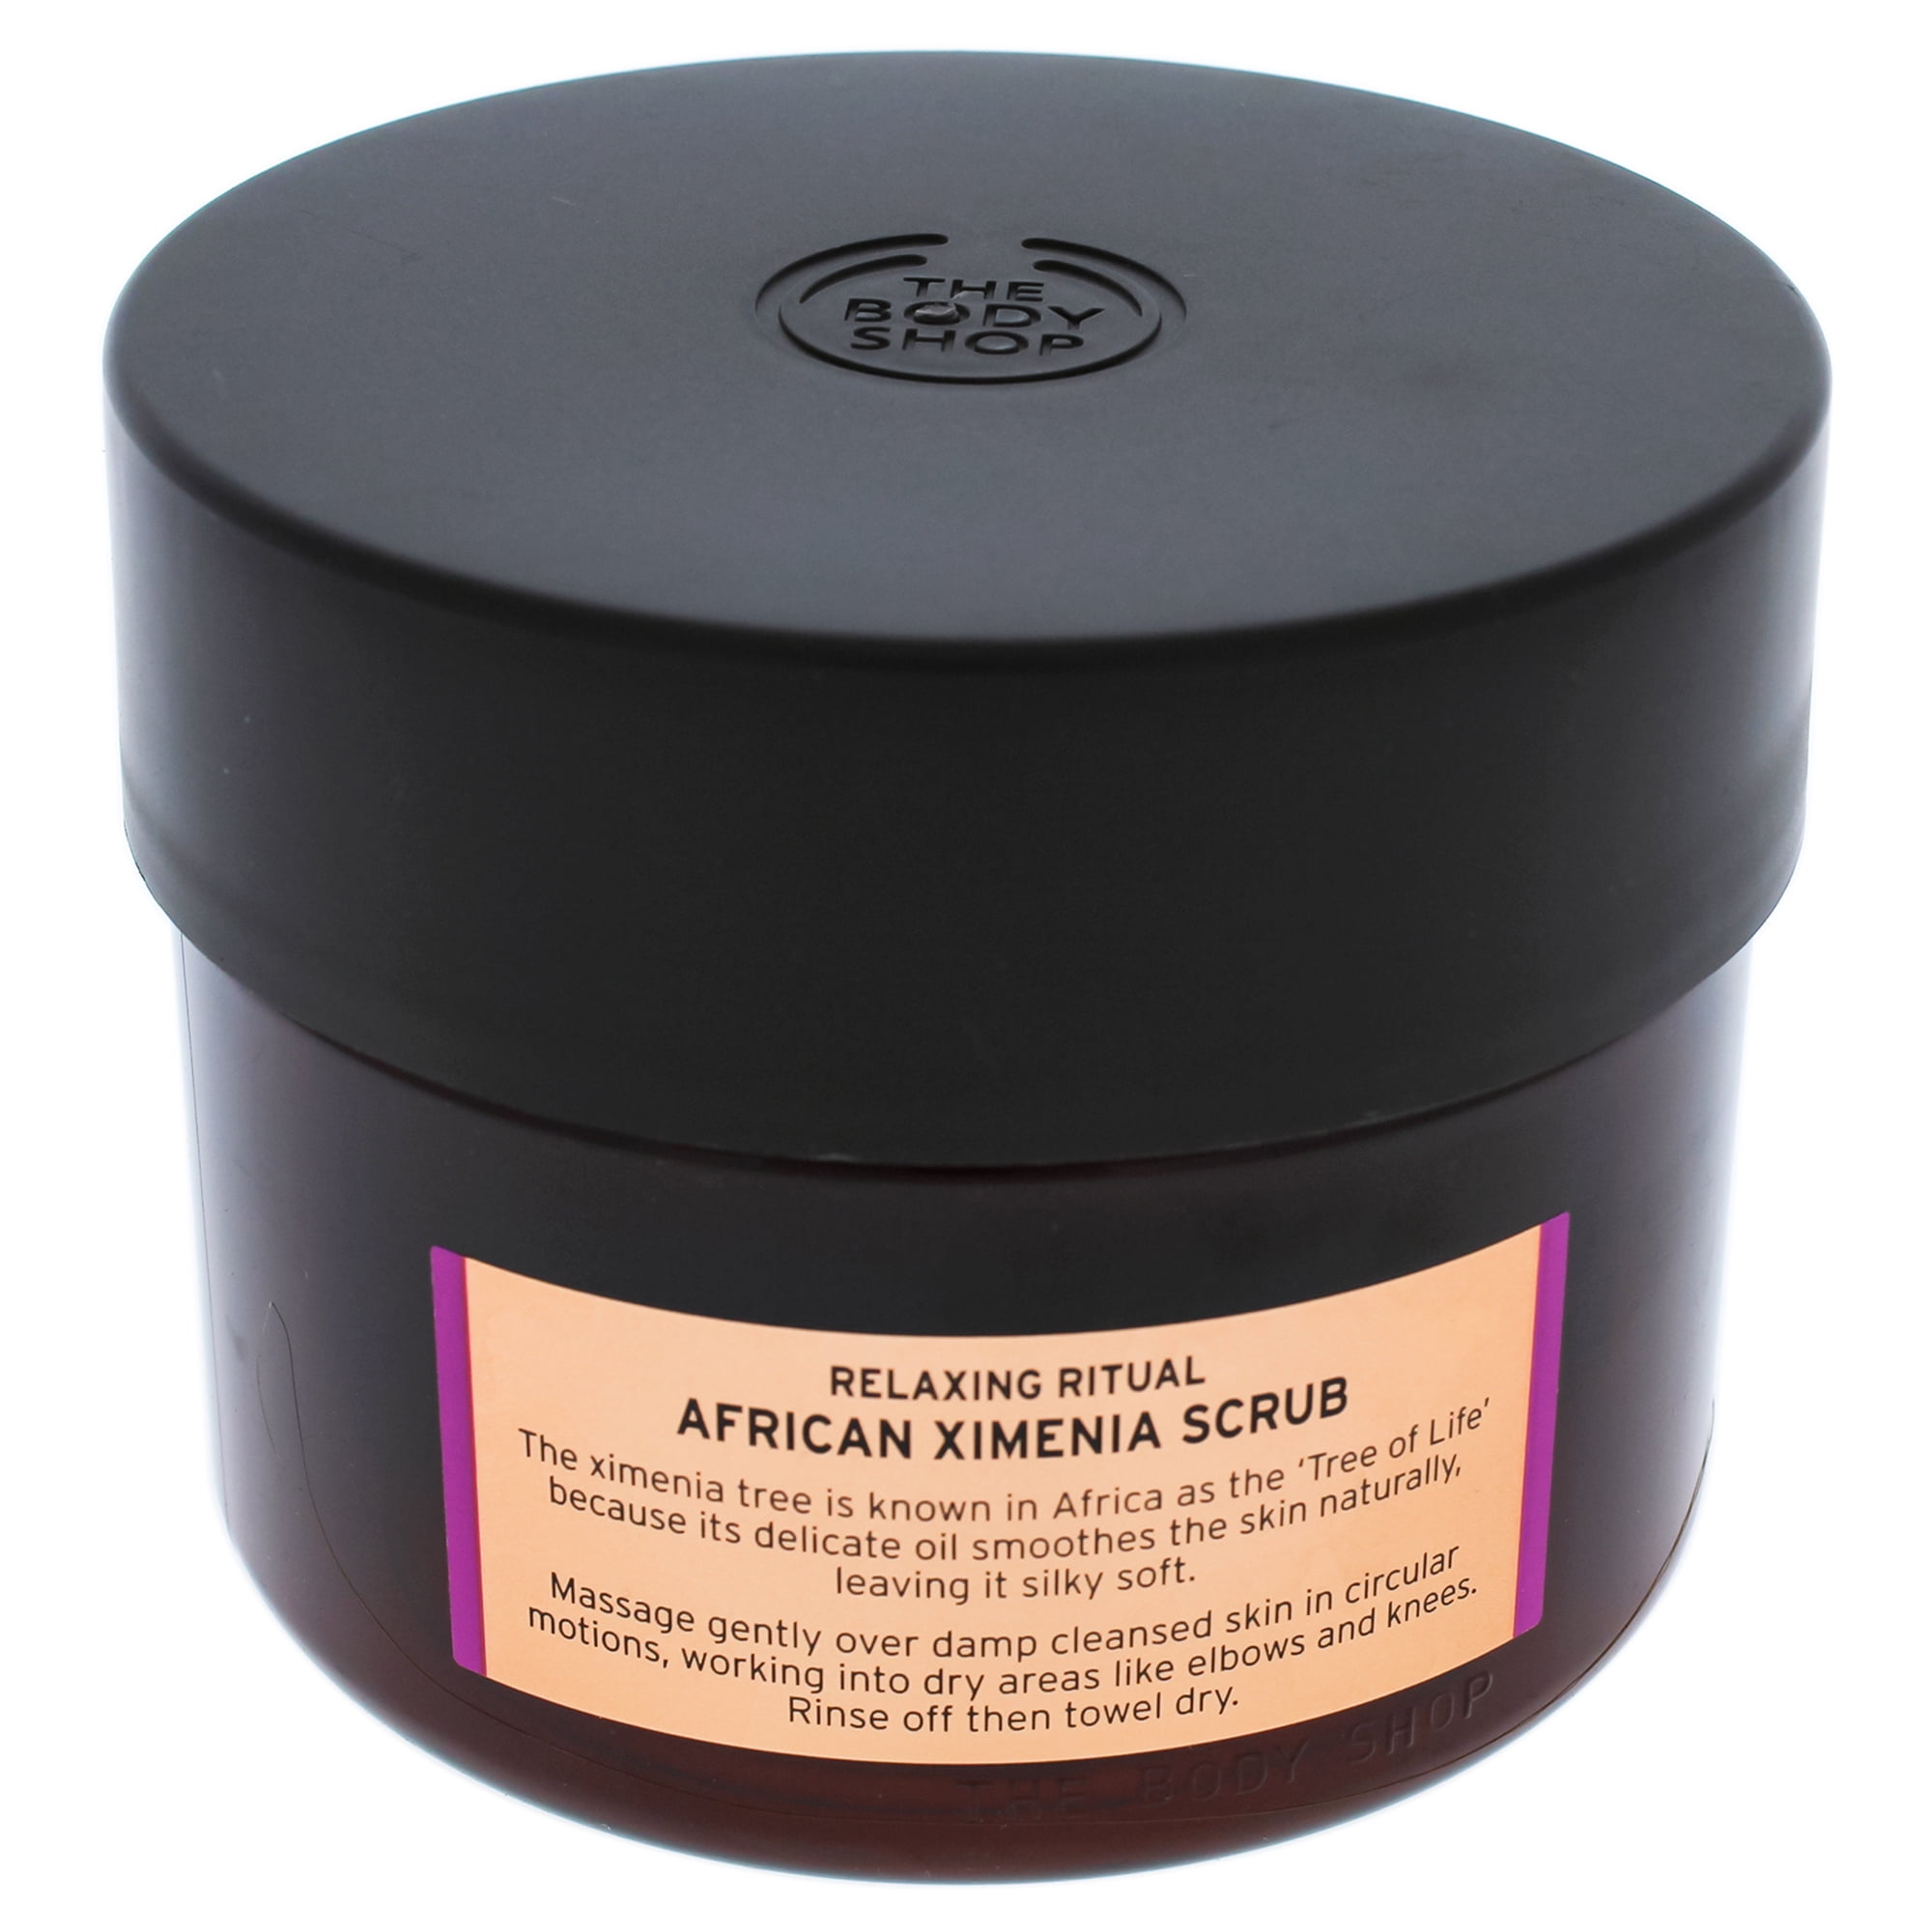 The Body Shop Spa Wisdom Africa Ximenia & Salt Scrub - Huge 13.5 oz Jar -  RARE